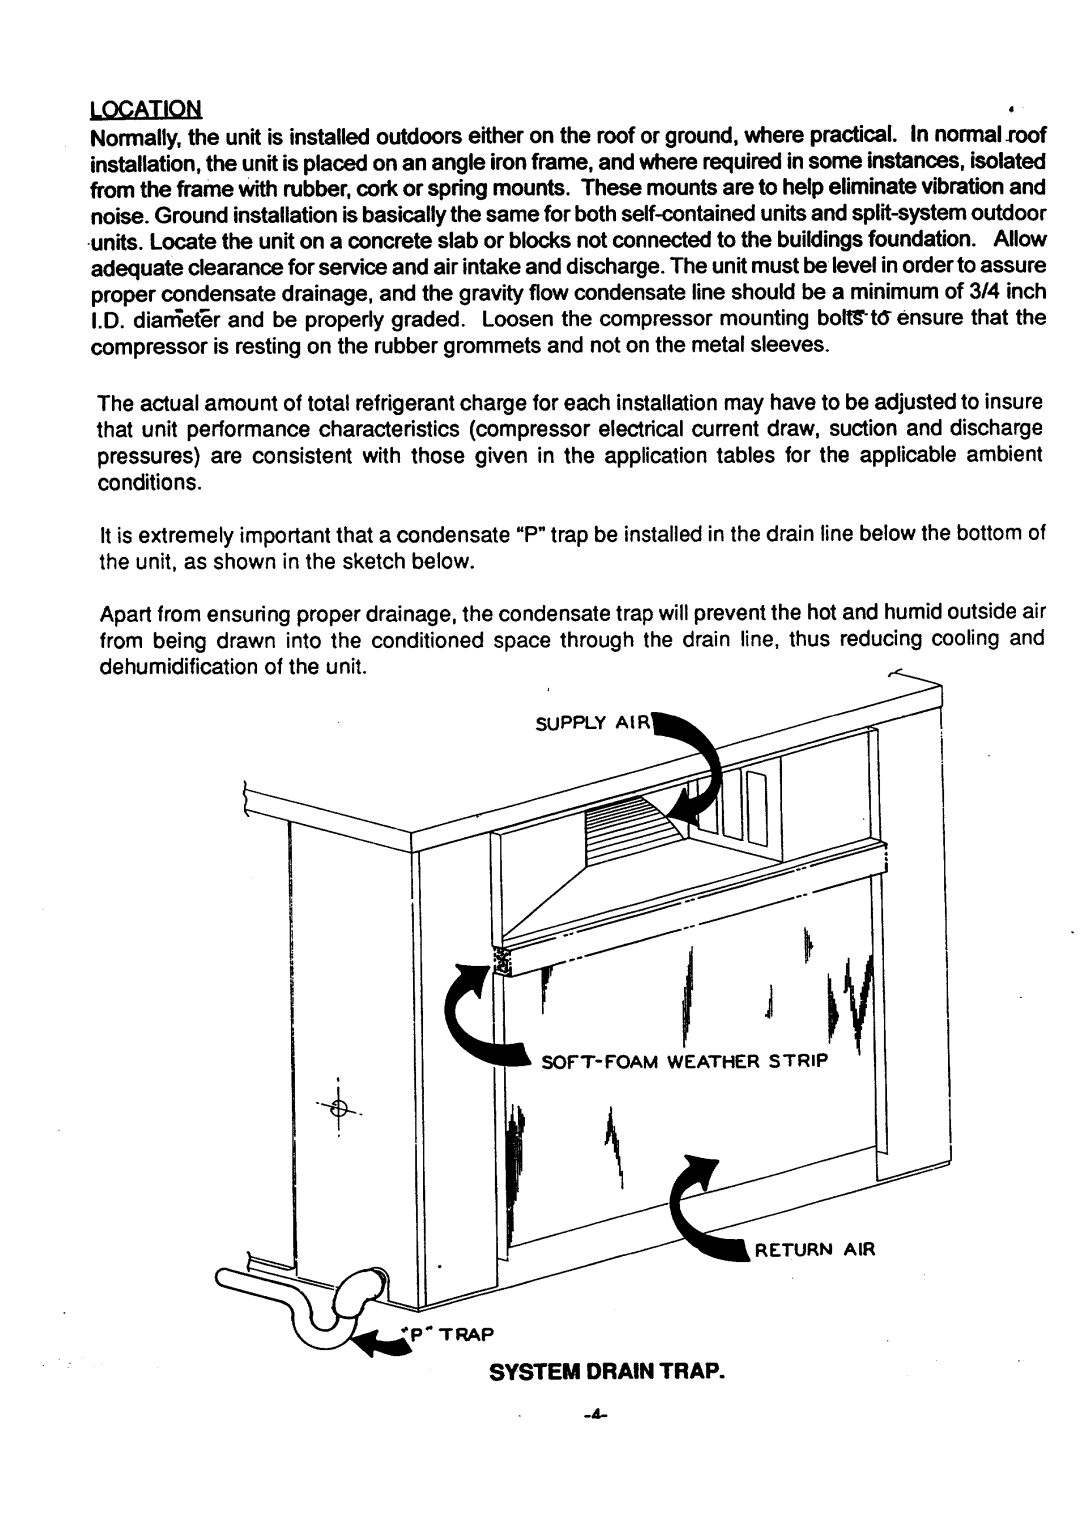 Goetti Air Conditioning Heat Pump manual System Drain Trap, Supply Ai Soft-Foamweather Strip Return Air 